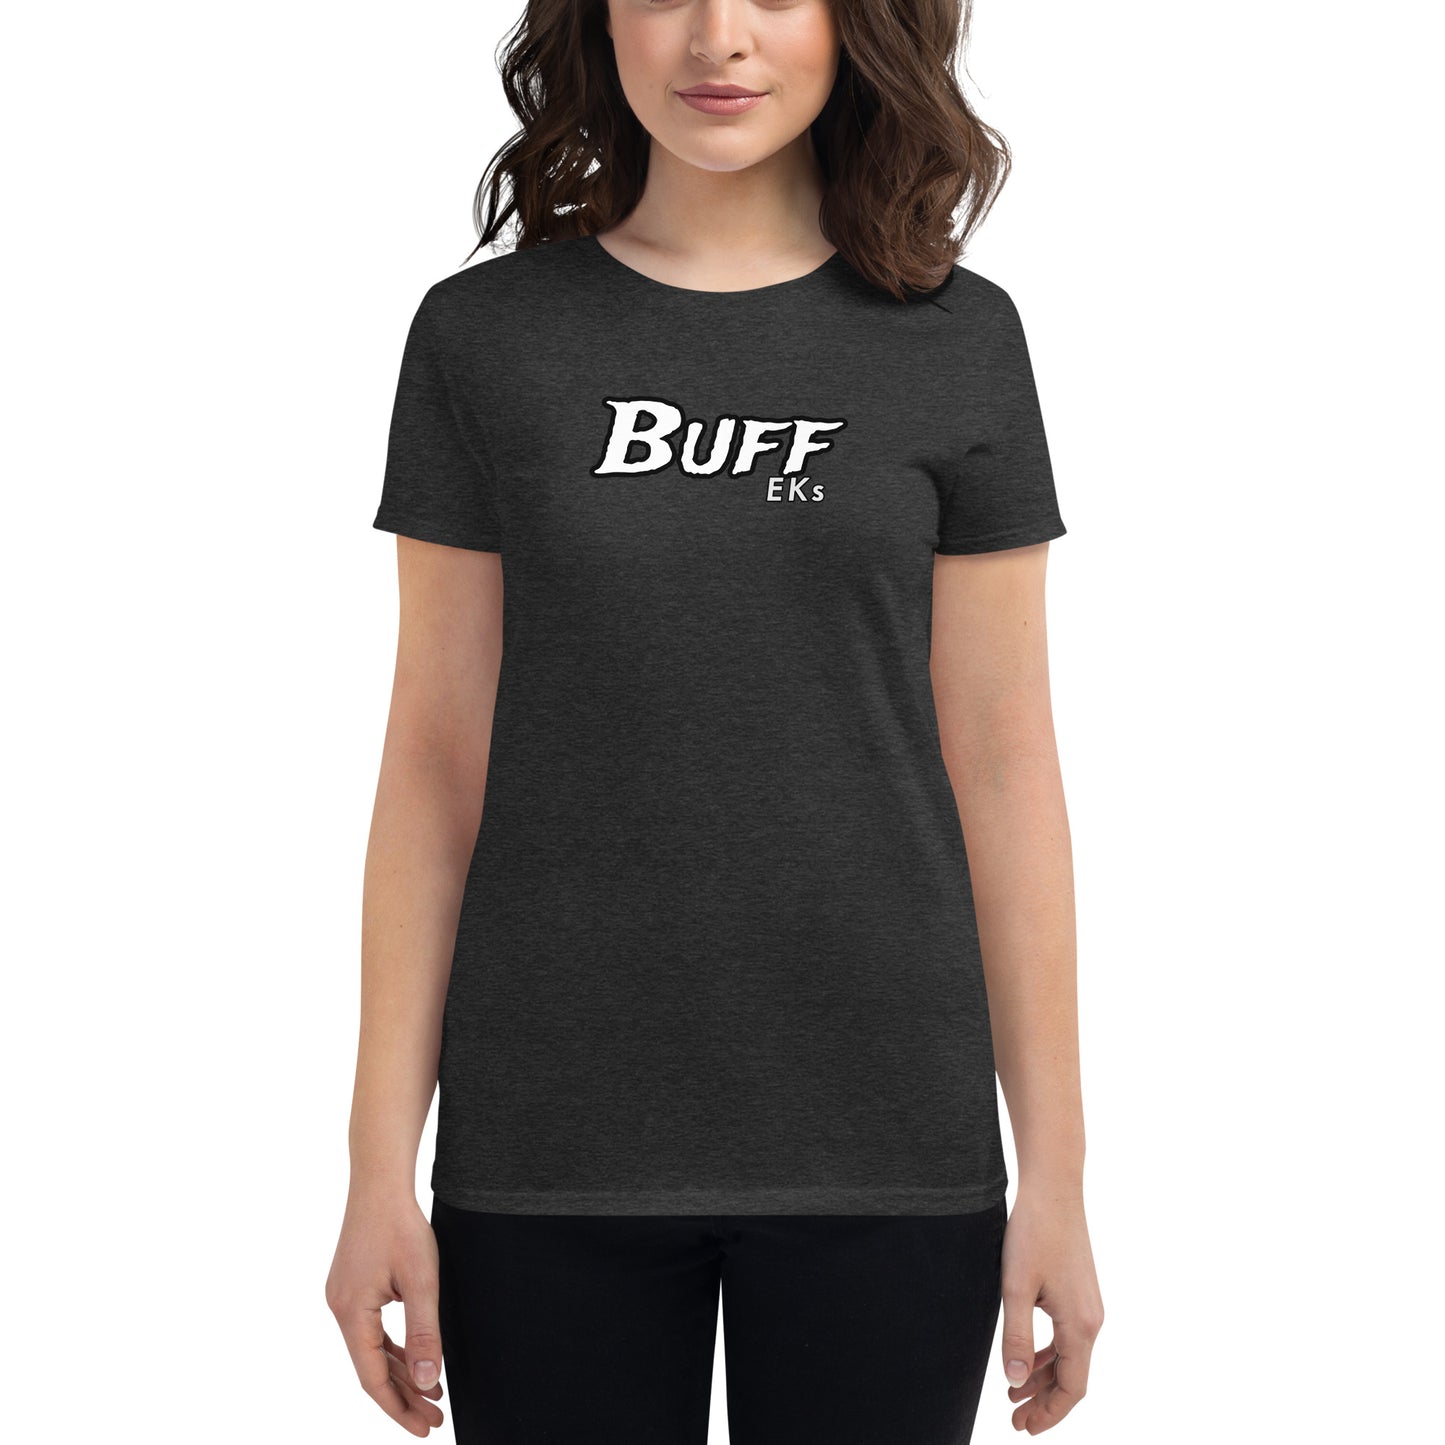 Buff EKs Women's Fashion Fit T-Shirt